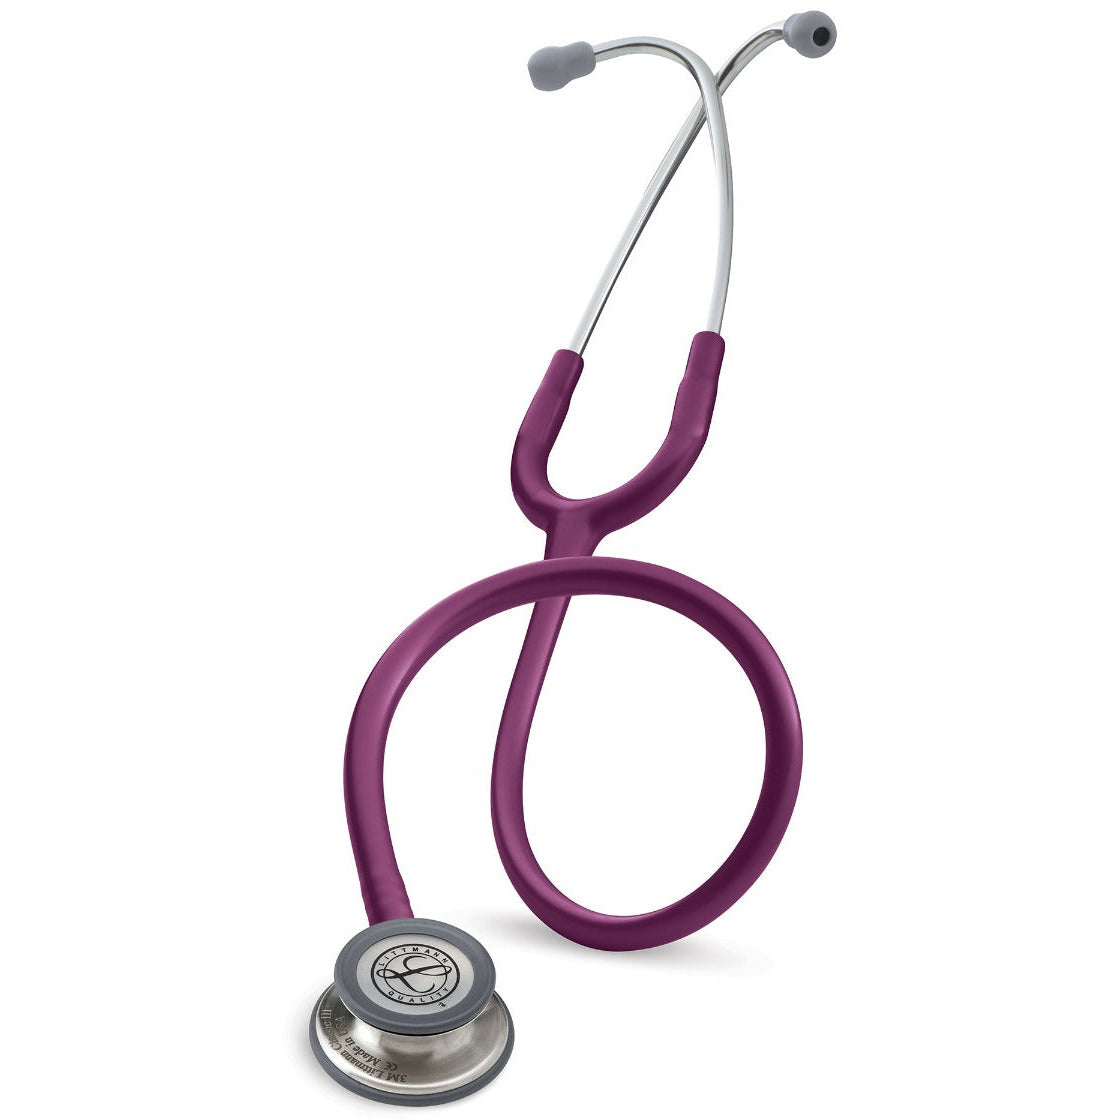 Advanced Nurses Kit Purple - Littmann Classic III Stethoscope Purple 5831, Sphyg, Thermometer, Scissors and More!